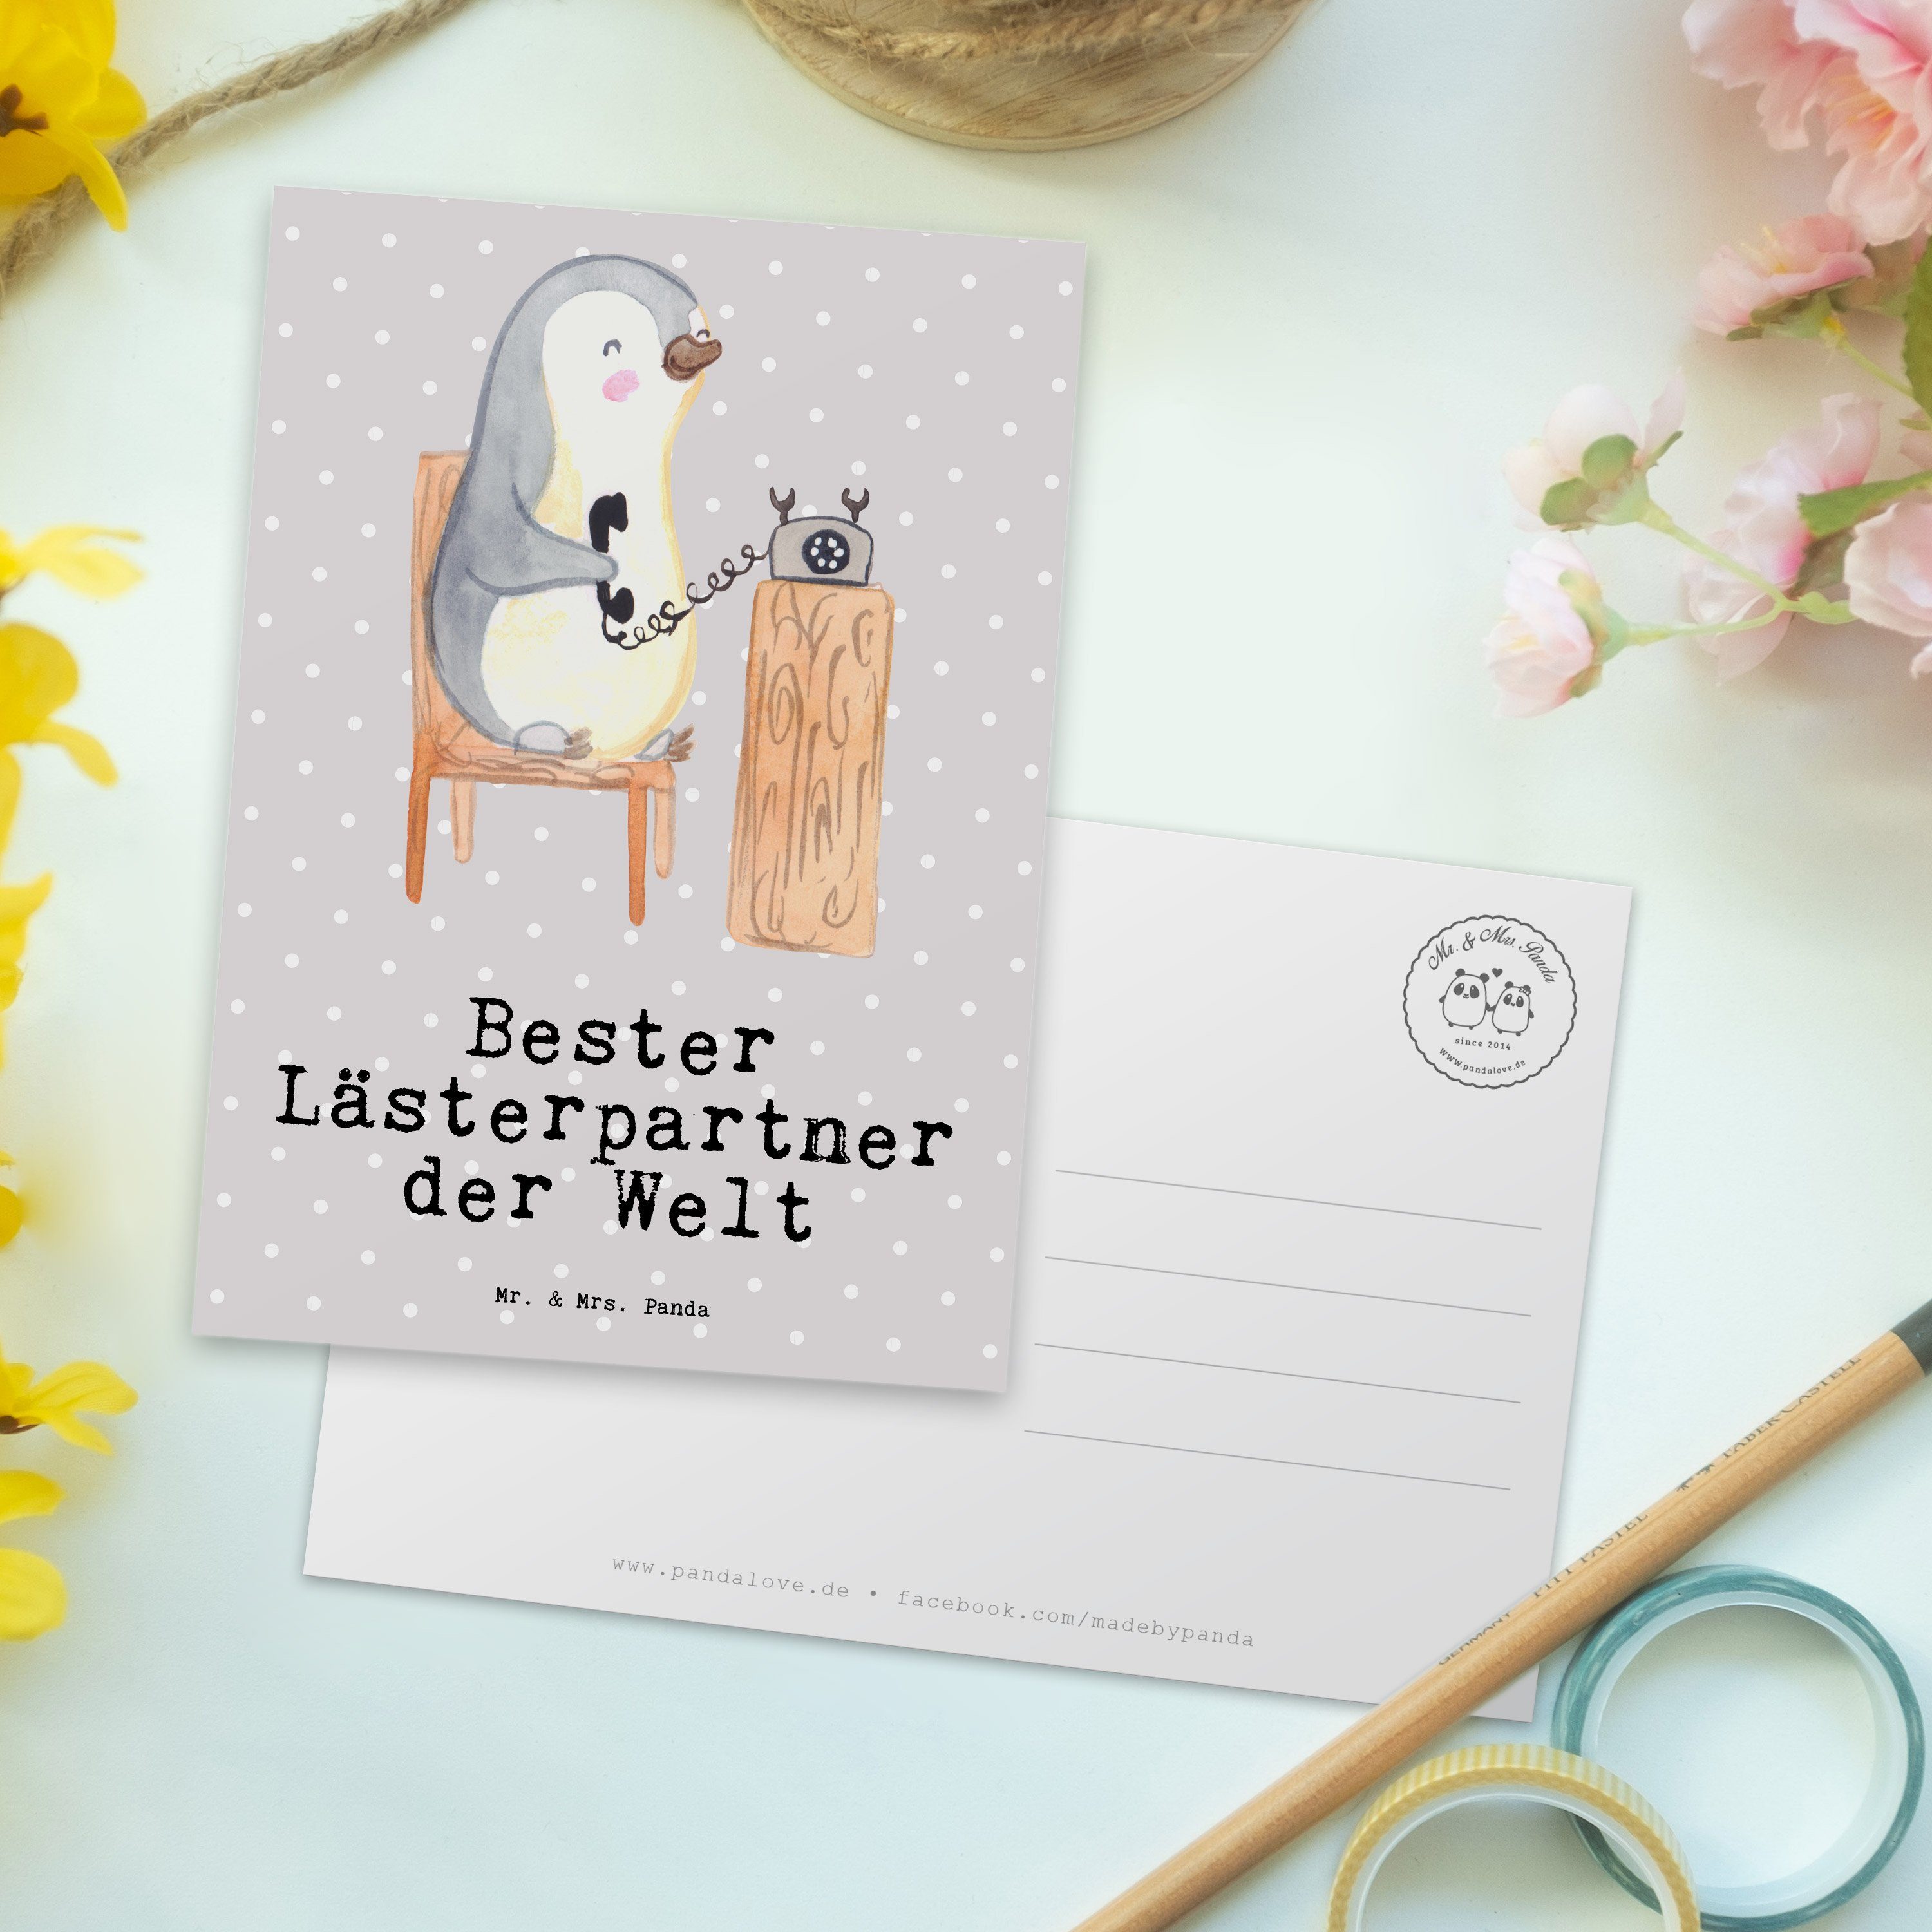 Pastell Pinguin - Geschenk, Bester - Postkarte Mr. der & Grau Welt Lästerpartner Panda lest Mrs.